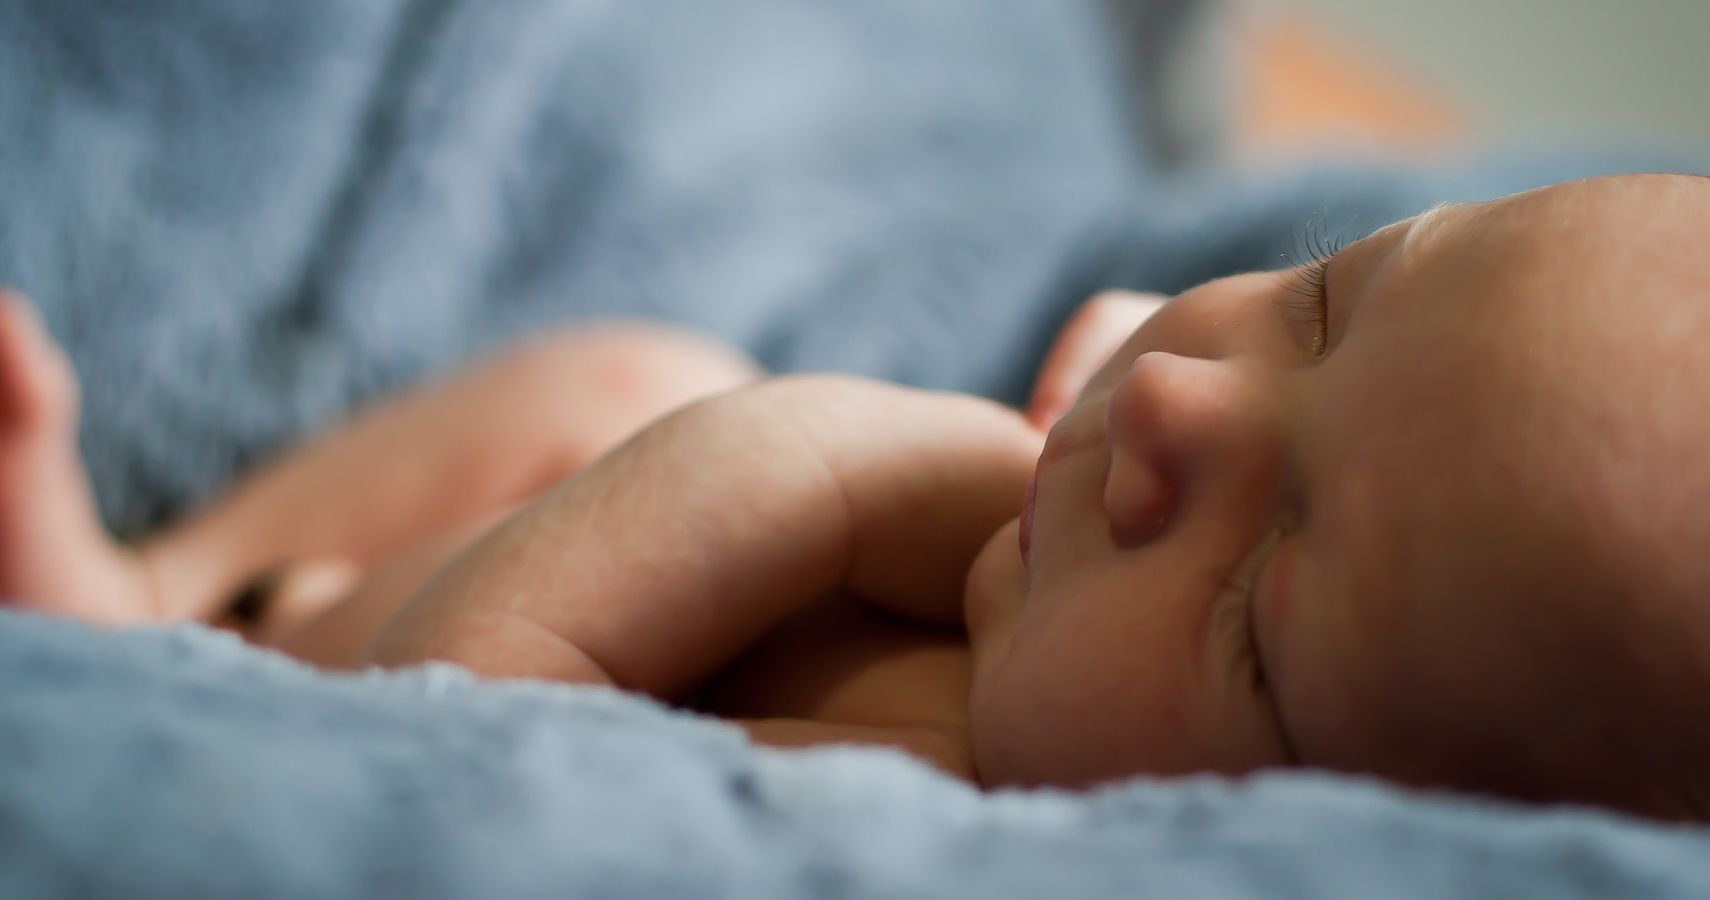 A baby asleep on a blue blanket